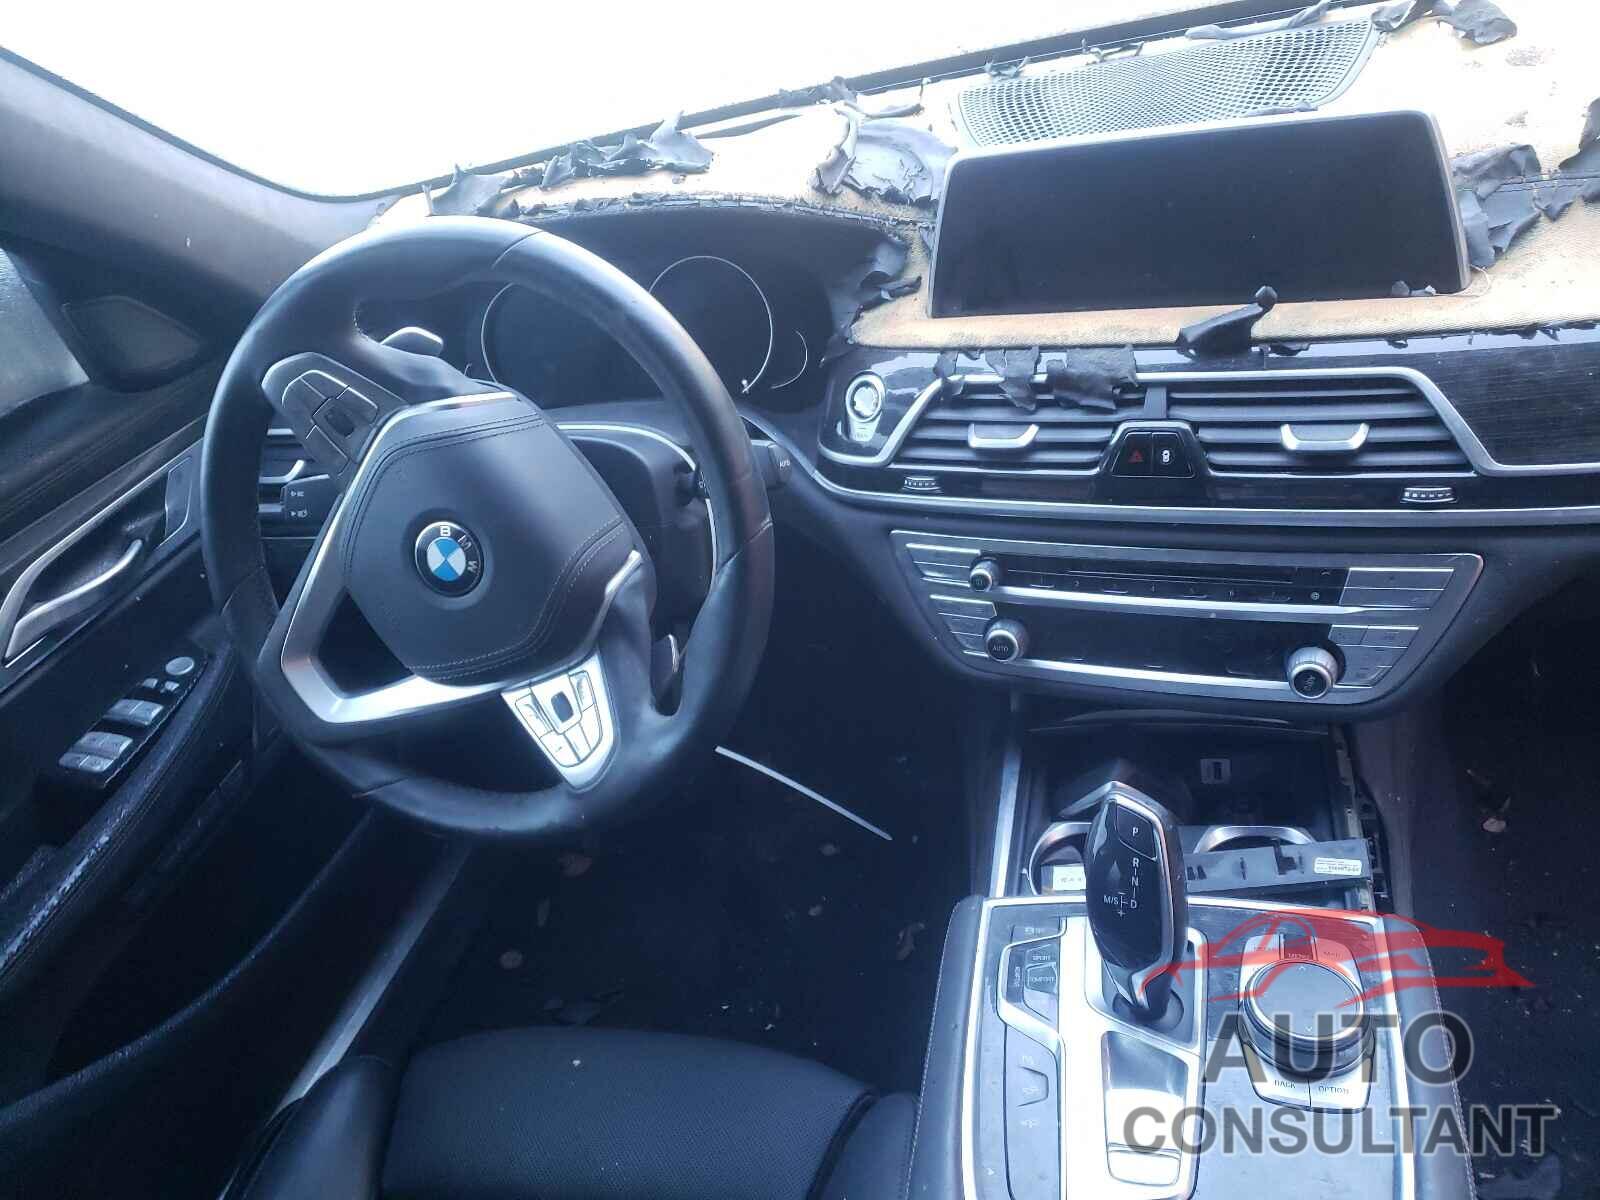 BMW 7 SERIES 2016 - WBA7F2C55GG416446